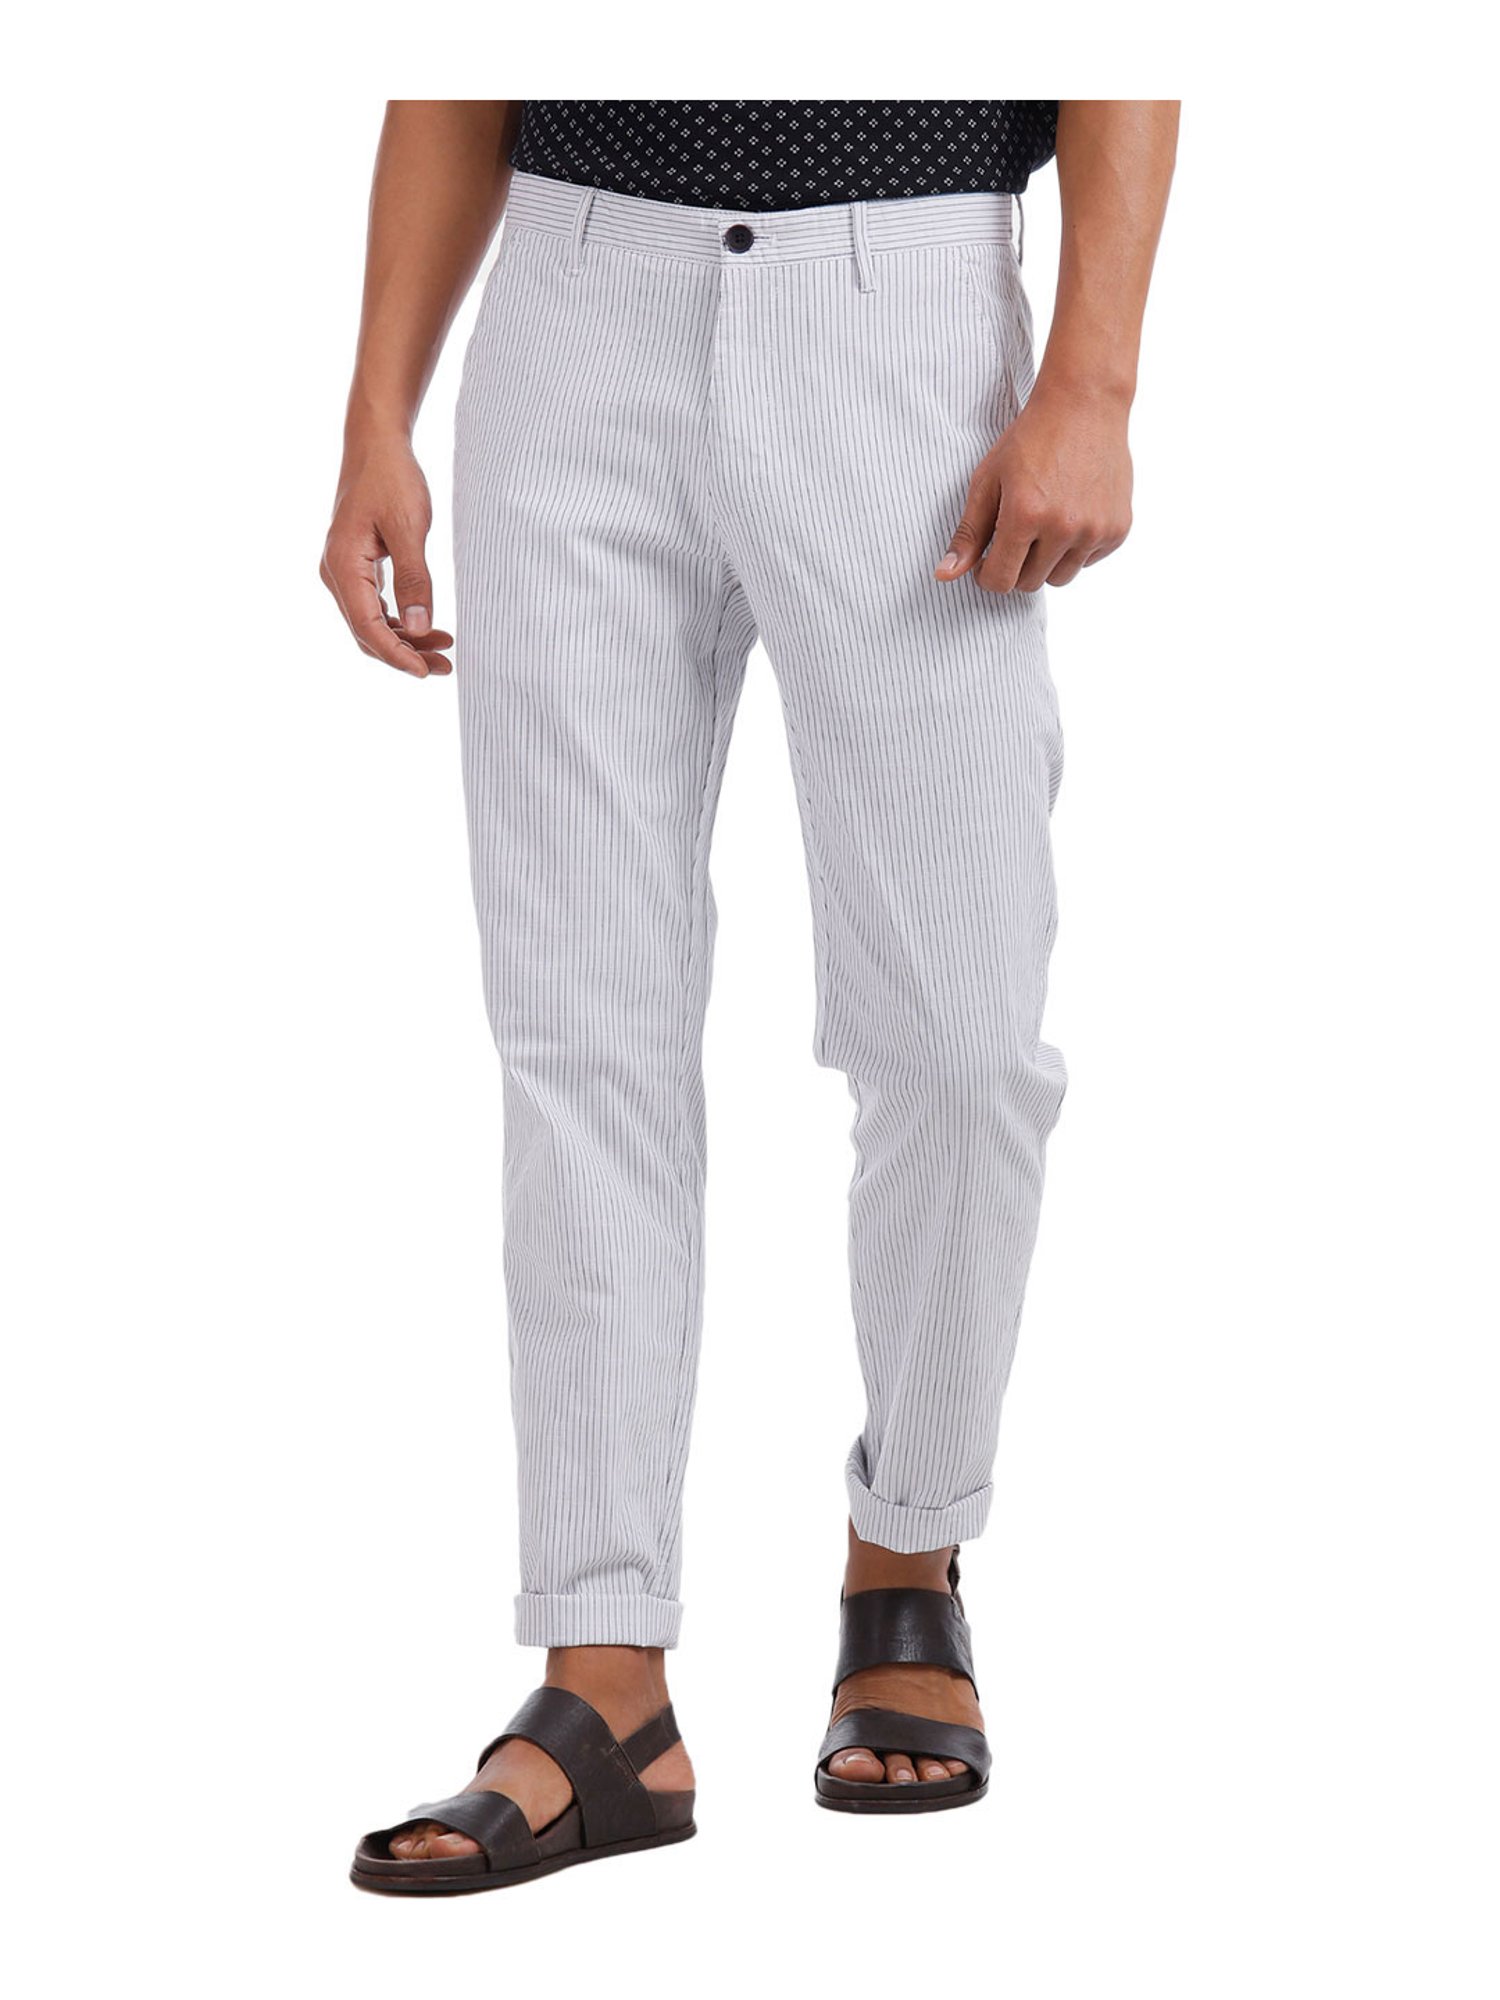 Buy Jack  Jones White  Blue Striped Trousers for Men Online  Tata CLiQ